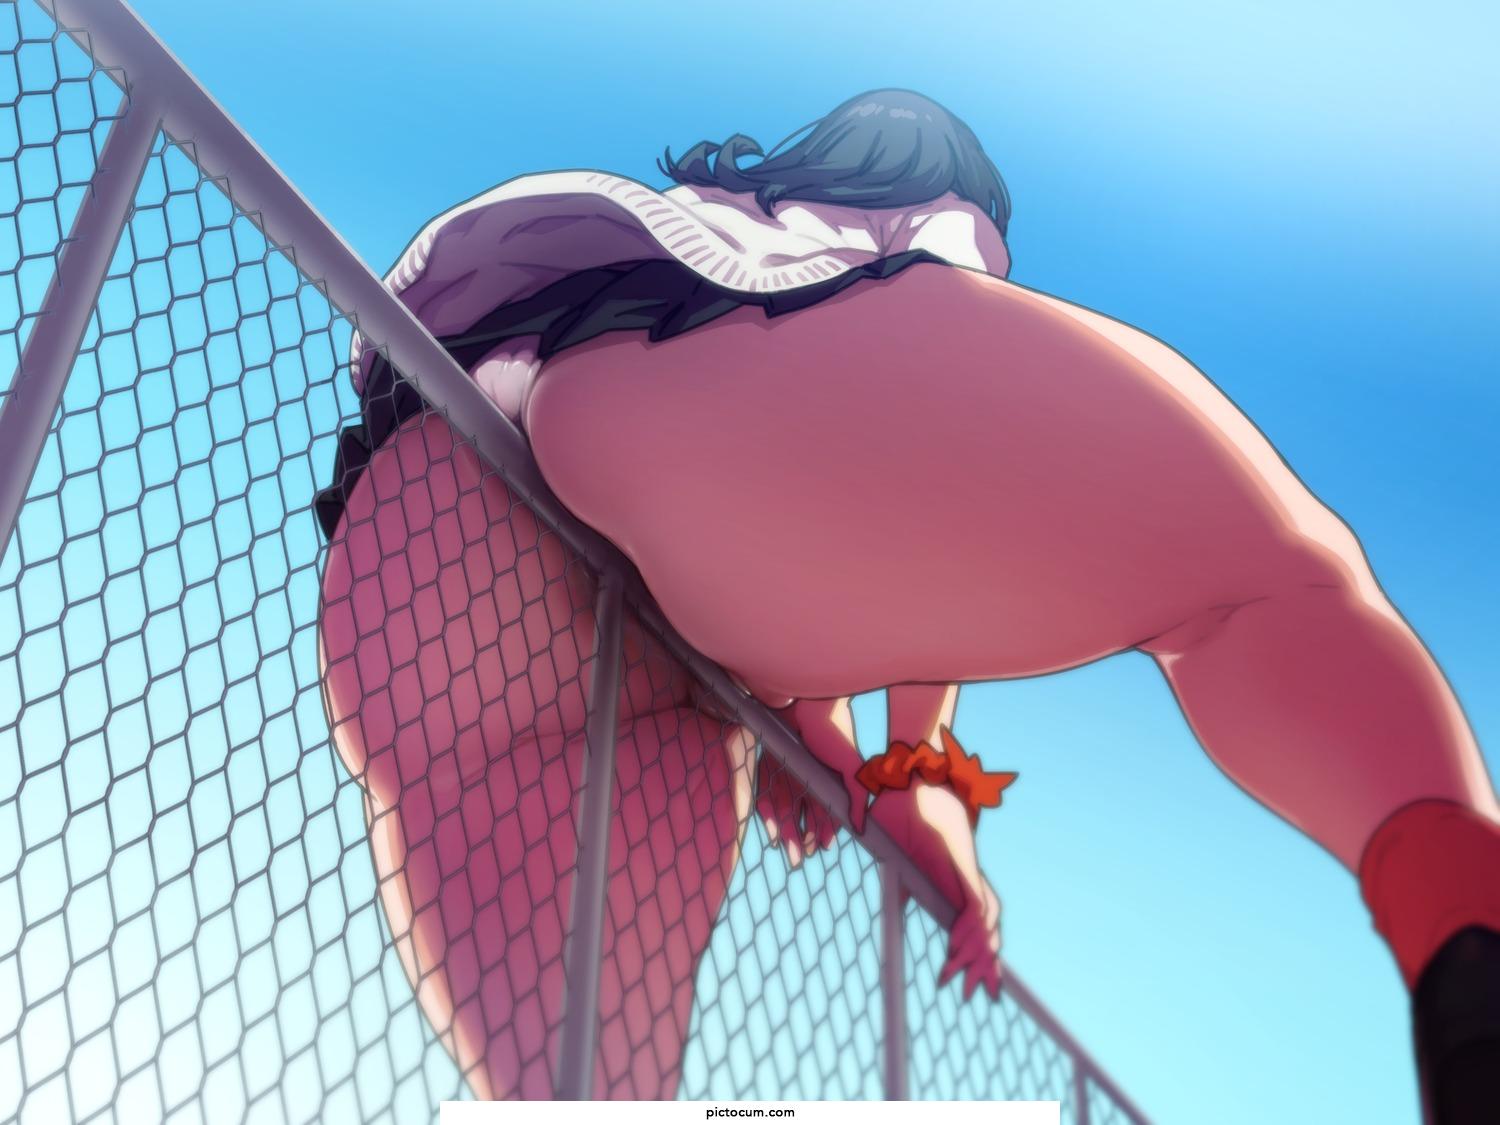 Rikka hops the fence